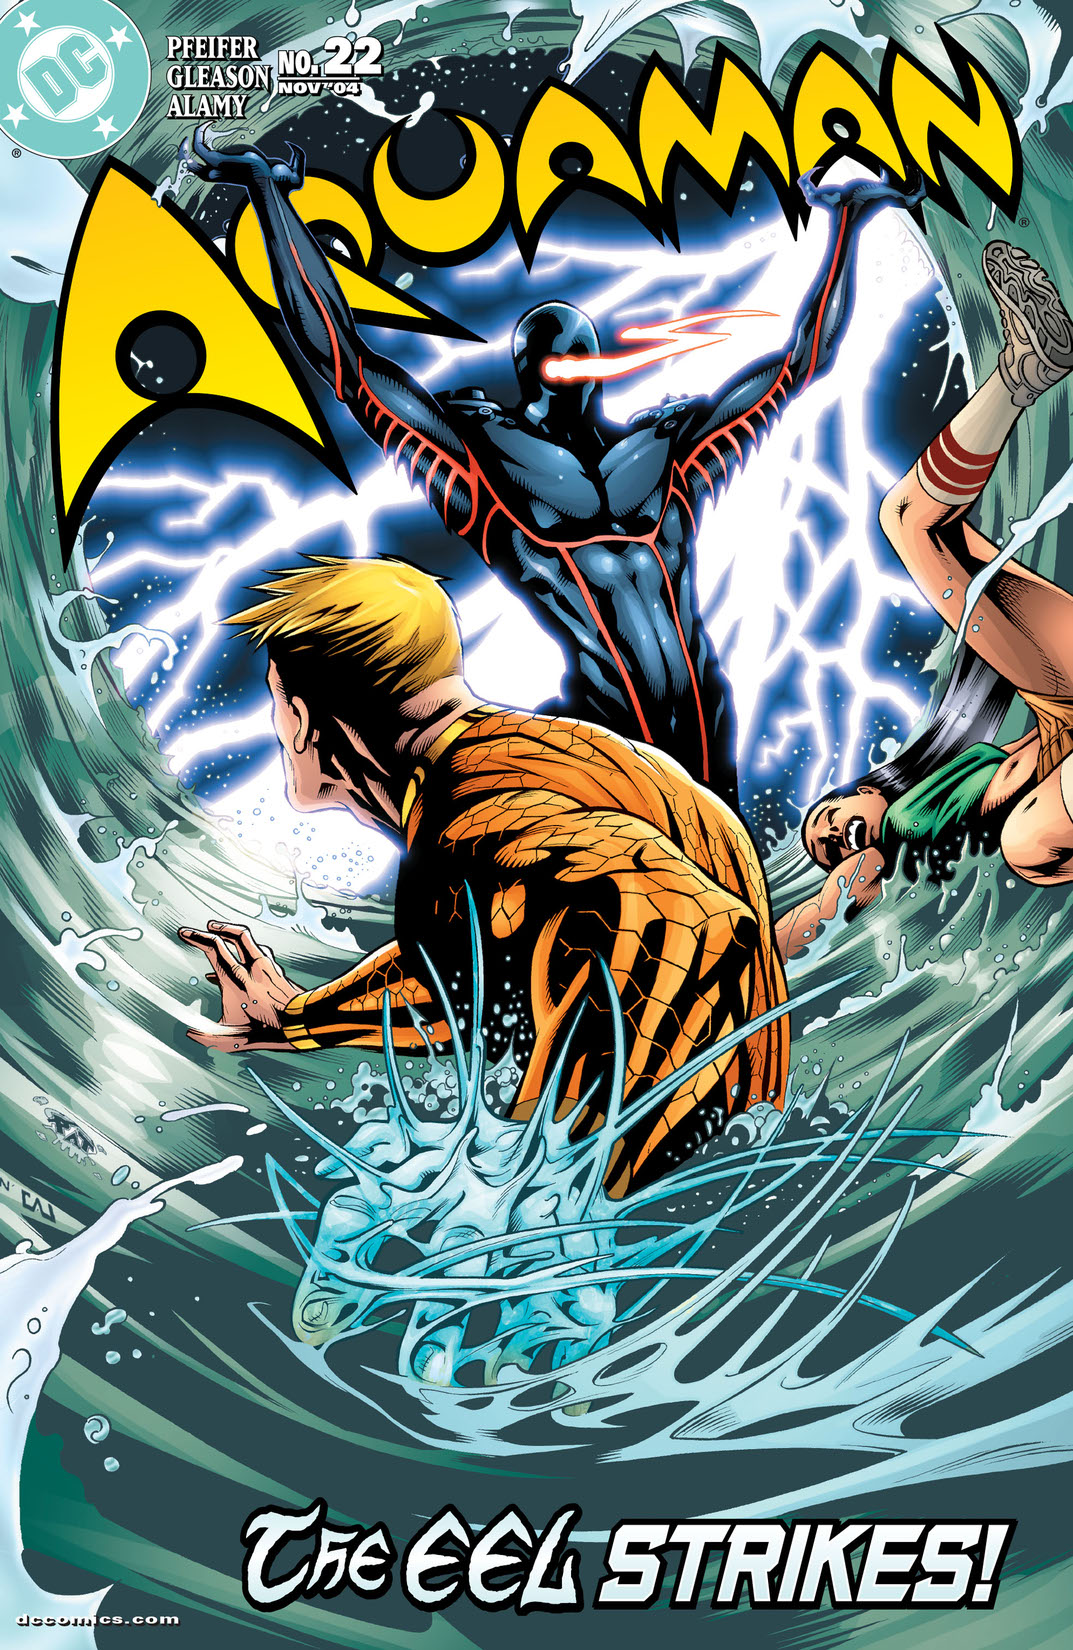 Aquaman (2002-) #22 preview images